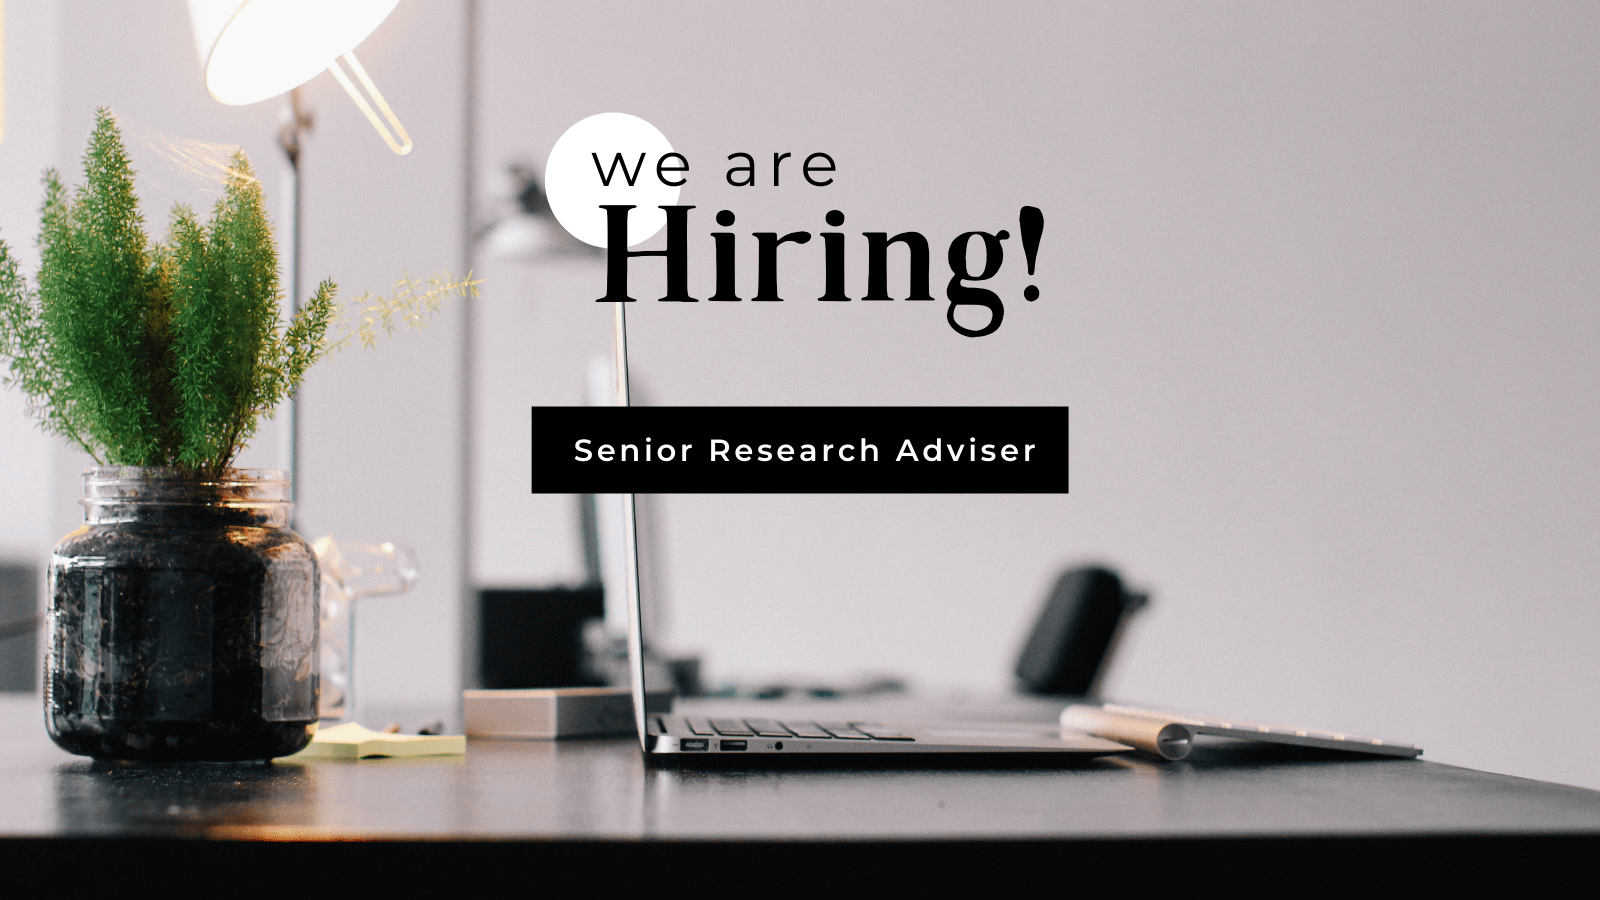 Senior Research Adviser – Job Advert